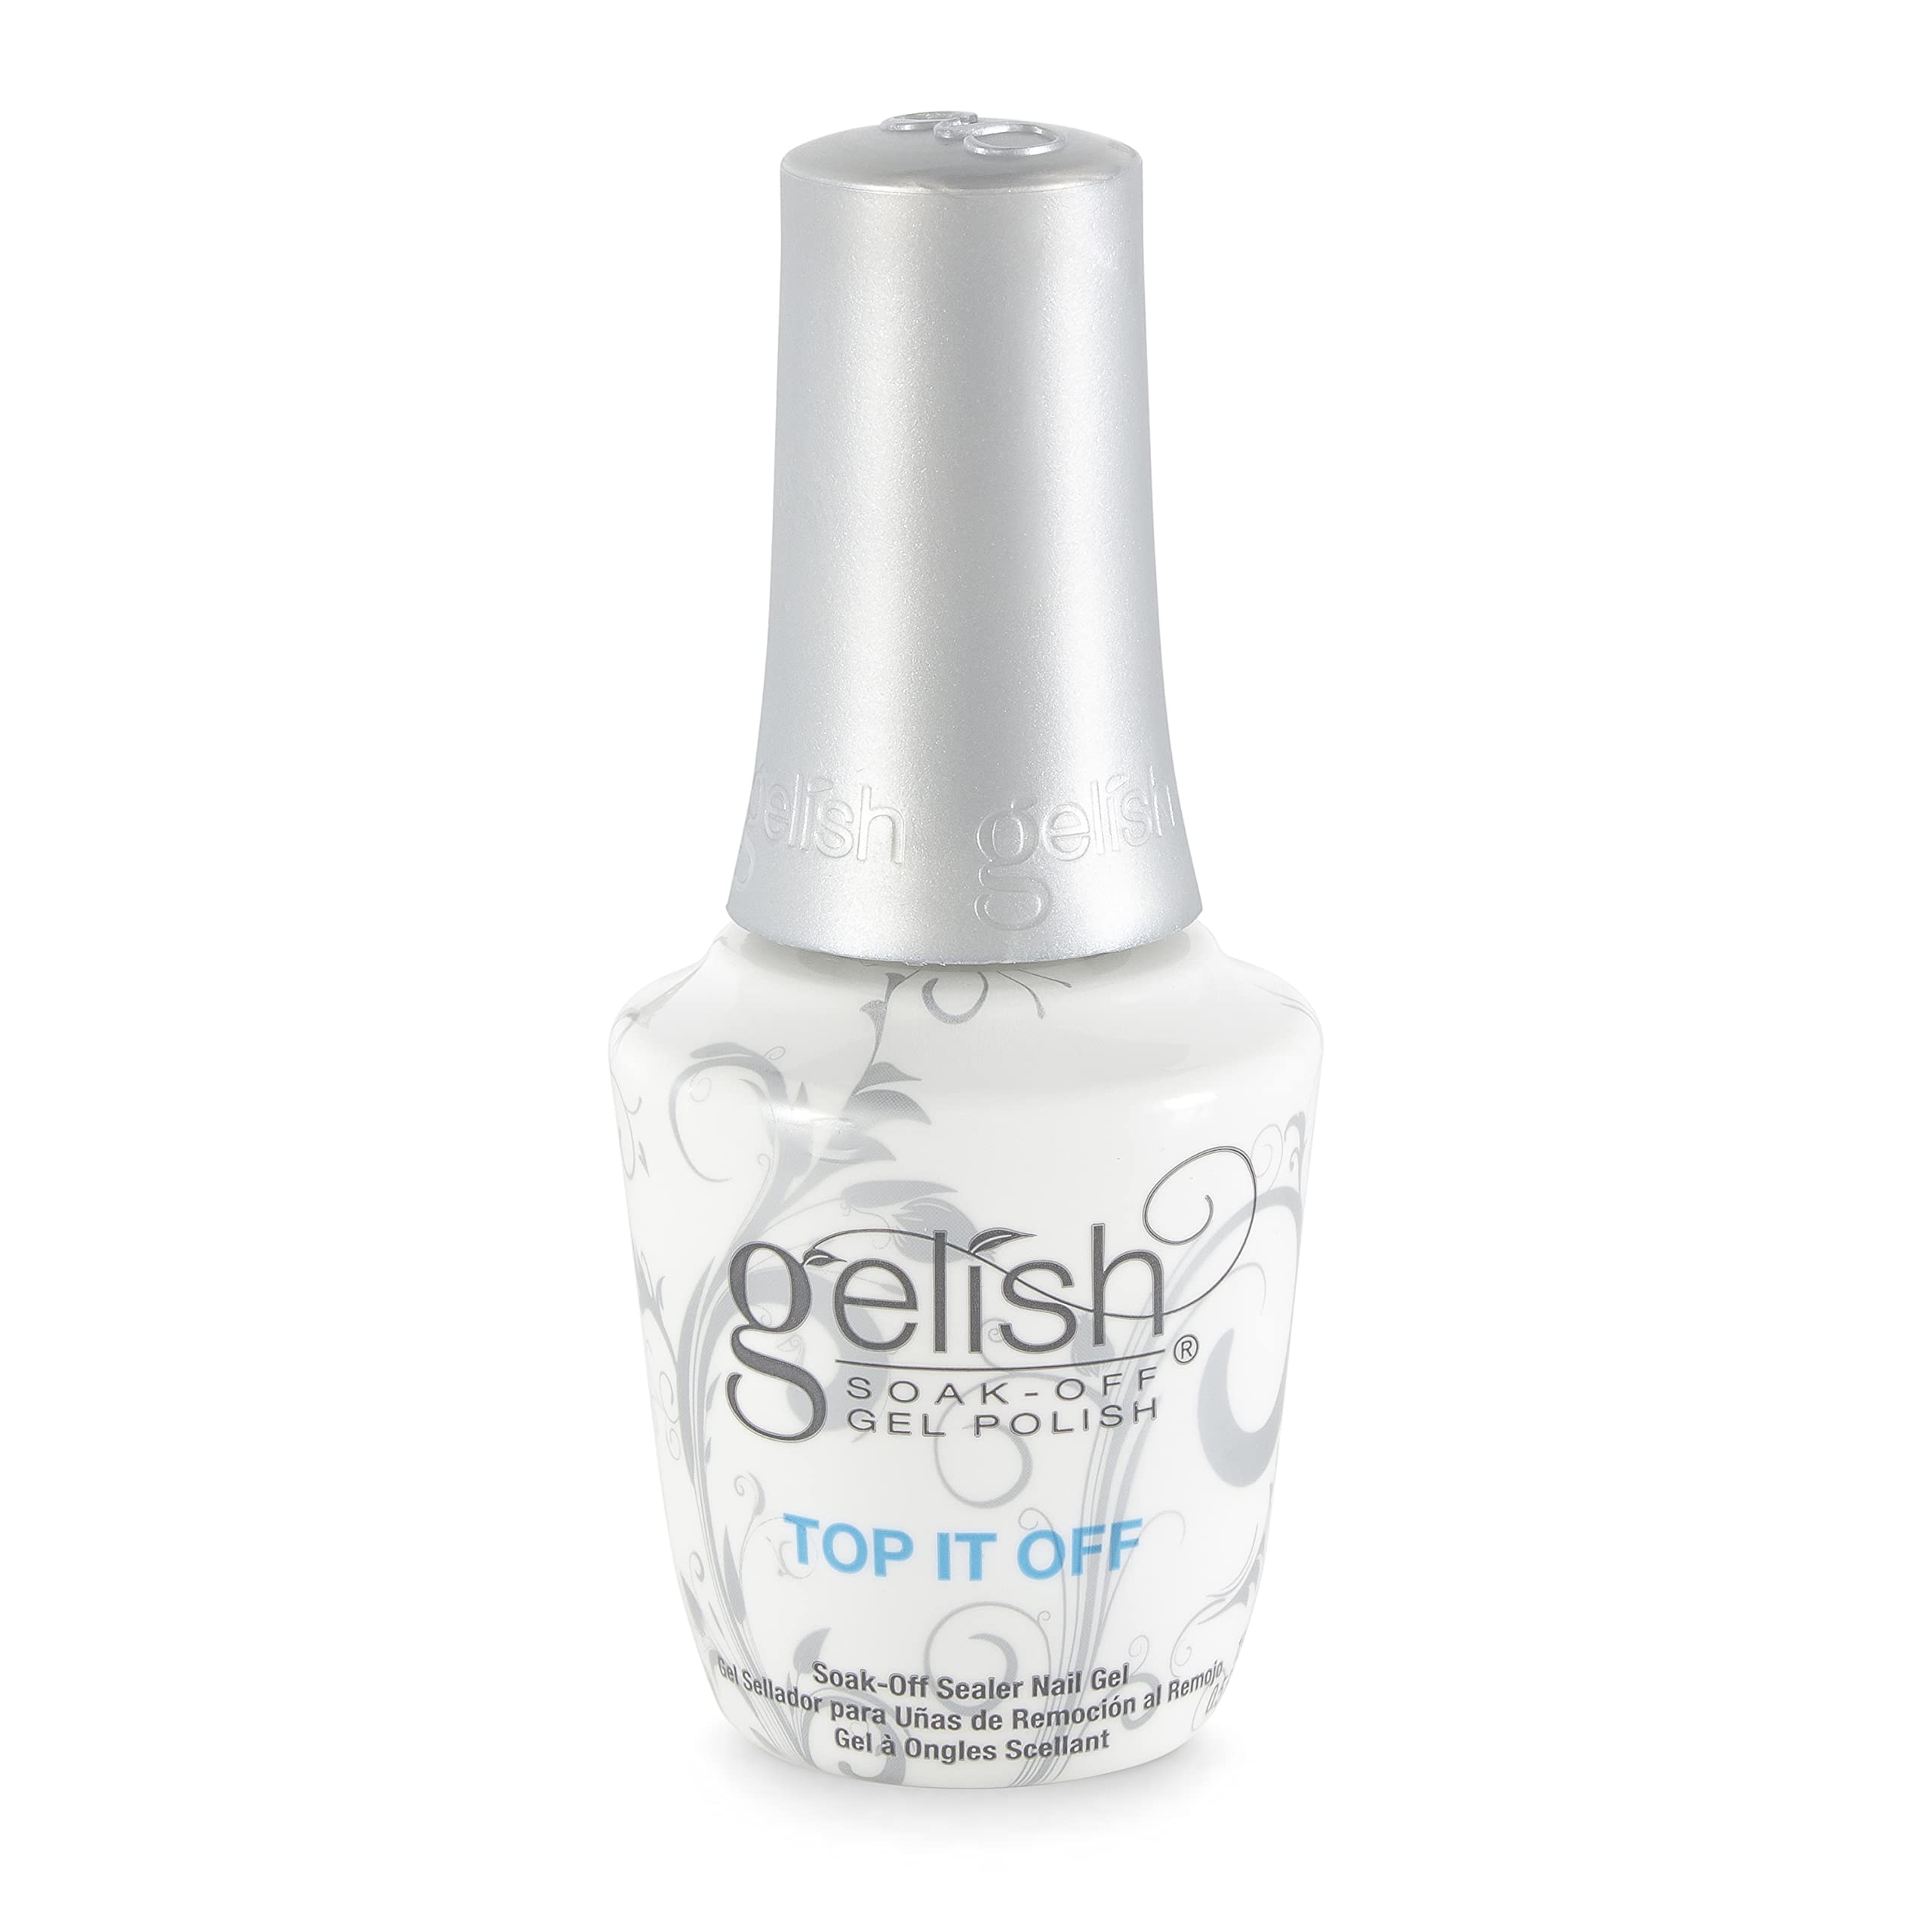 Gelish Terrific Trio Essentials 15 mL Basix Care Soak Off Manicure Gel Nail Polish Kit with Foundation, pH Bond and Top It Off Gel